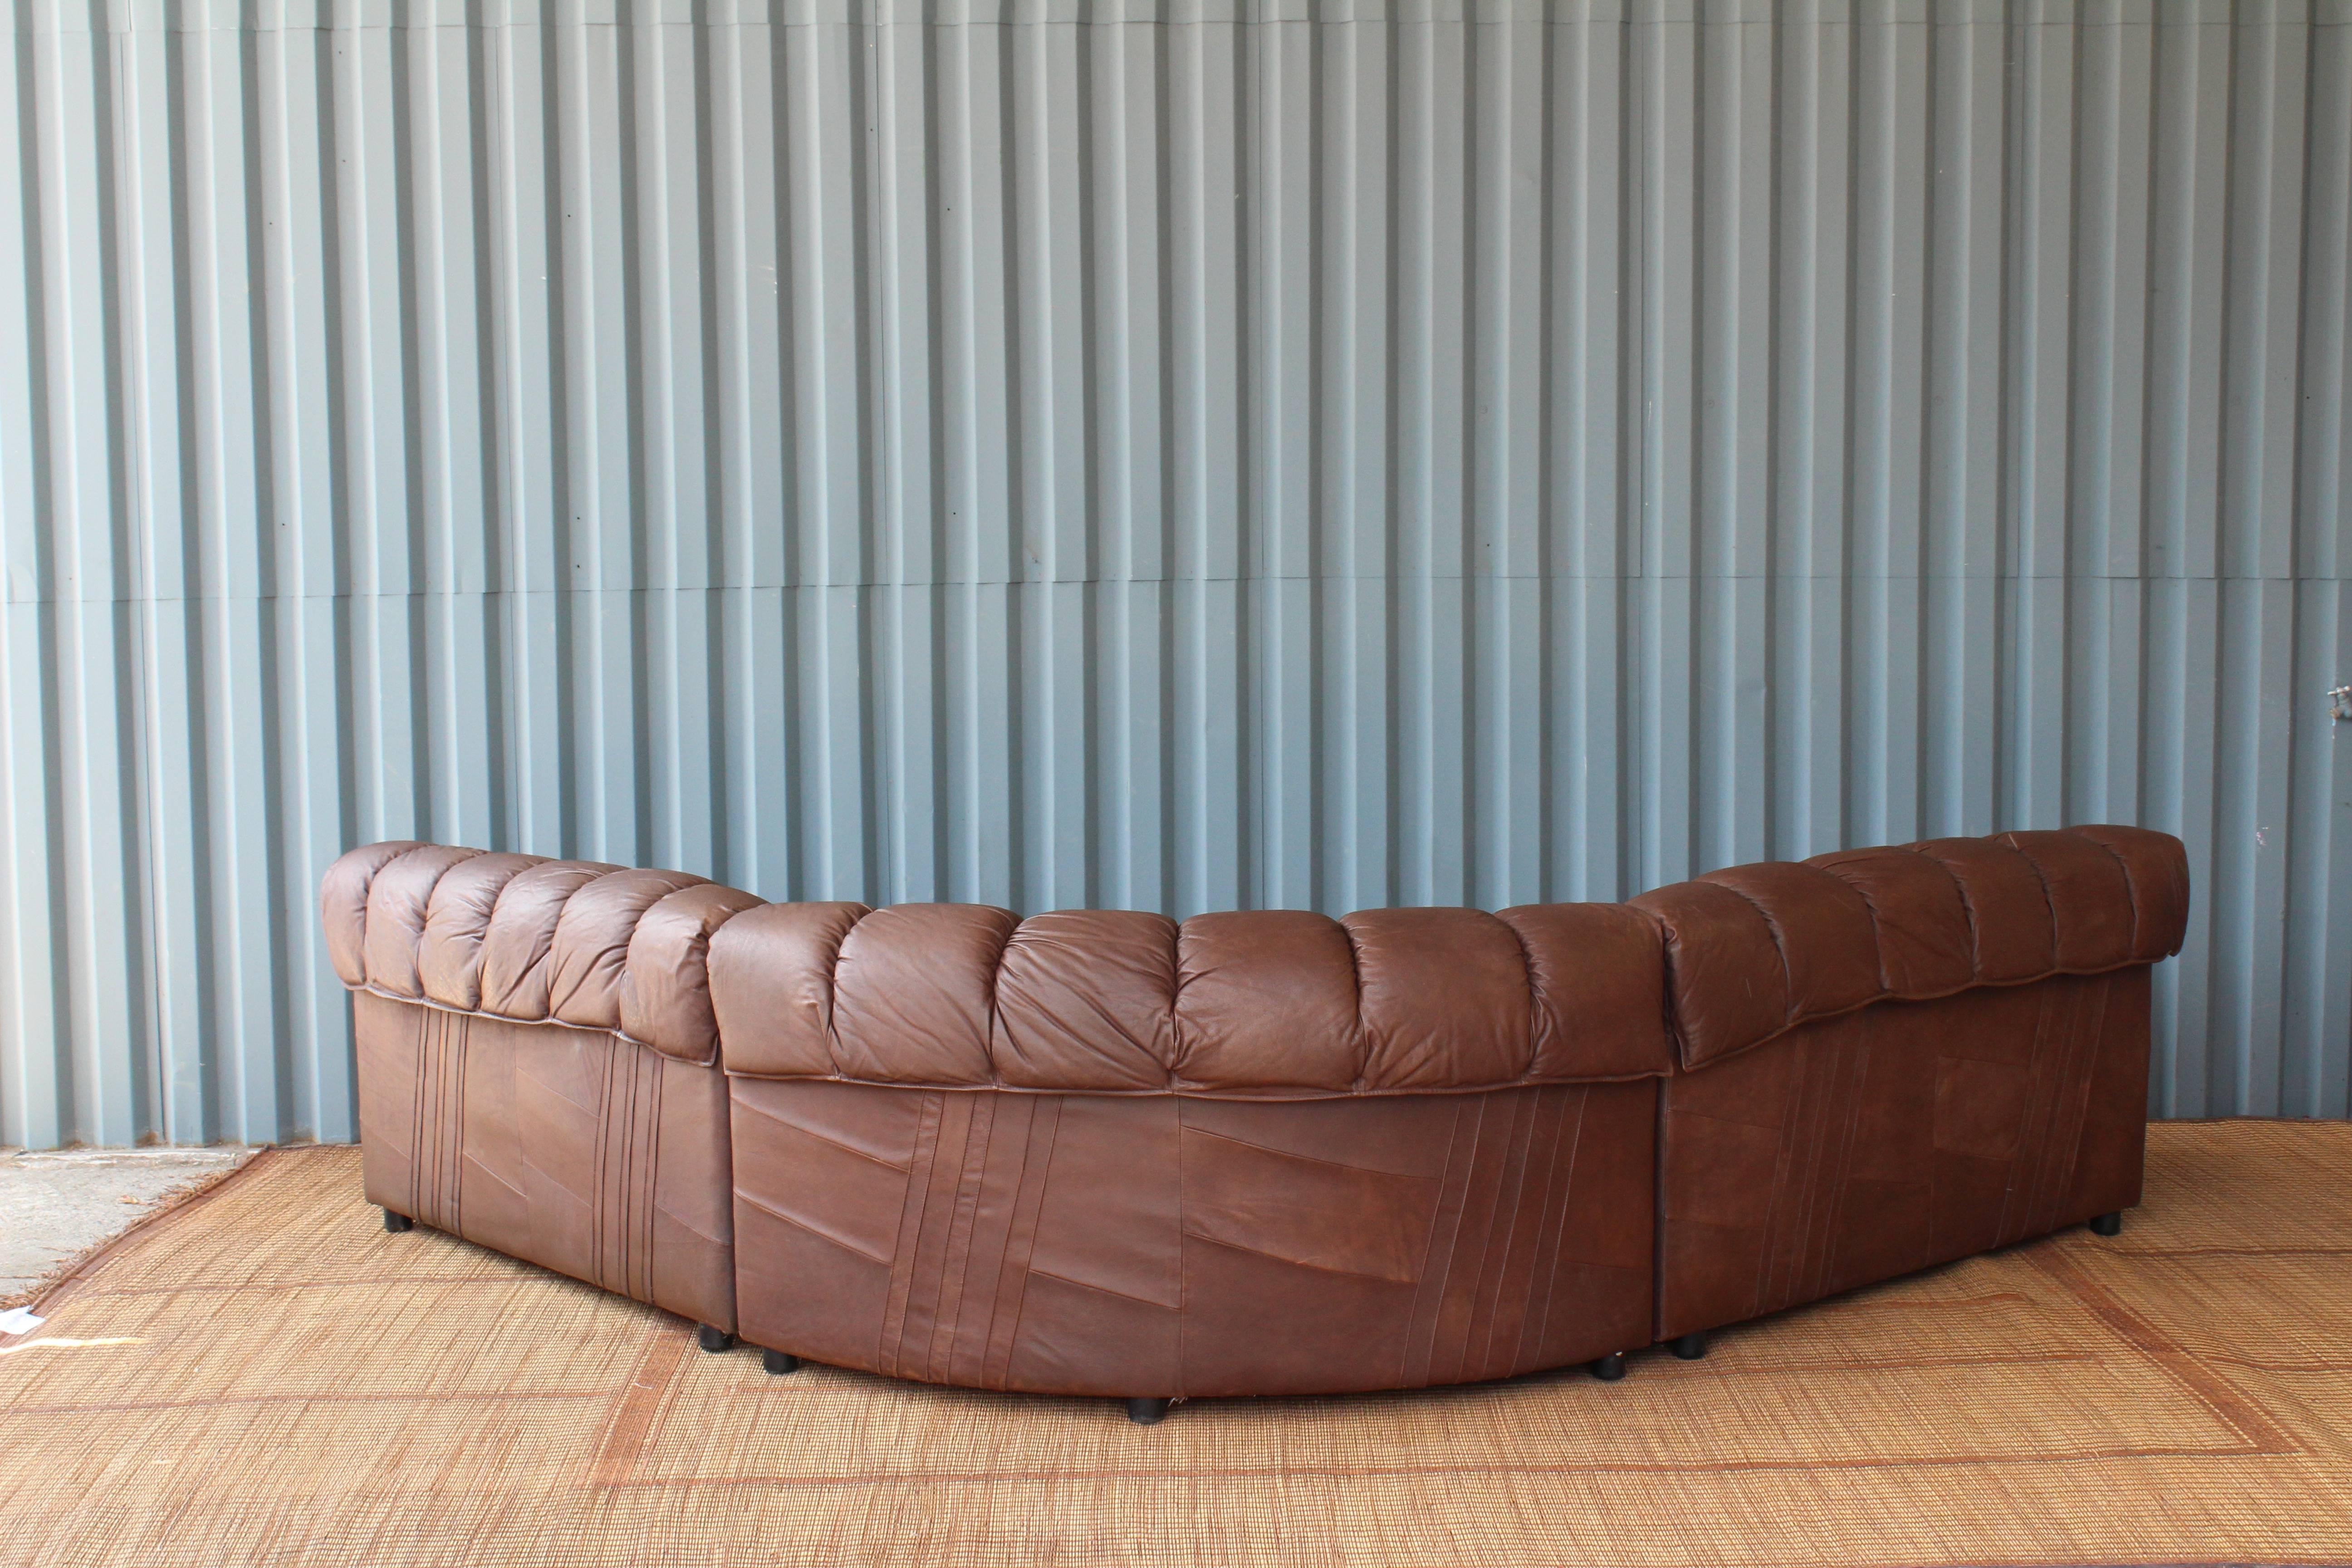 1970s sectional sofa